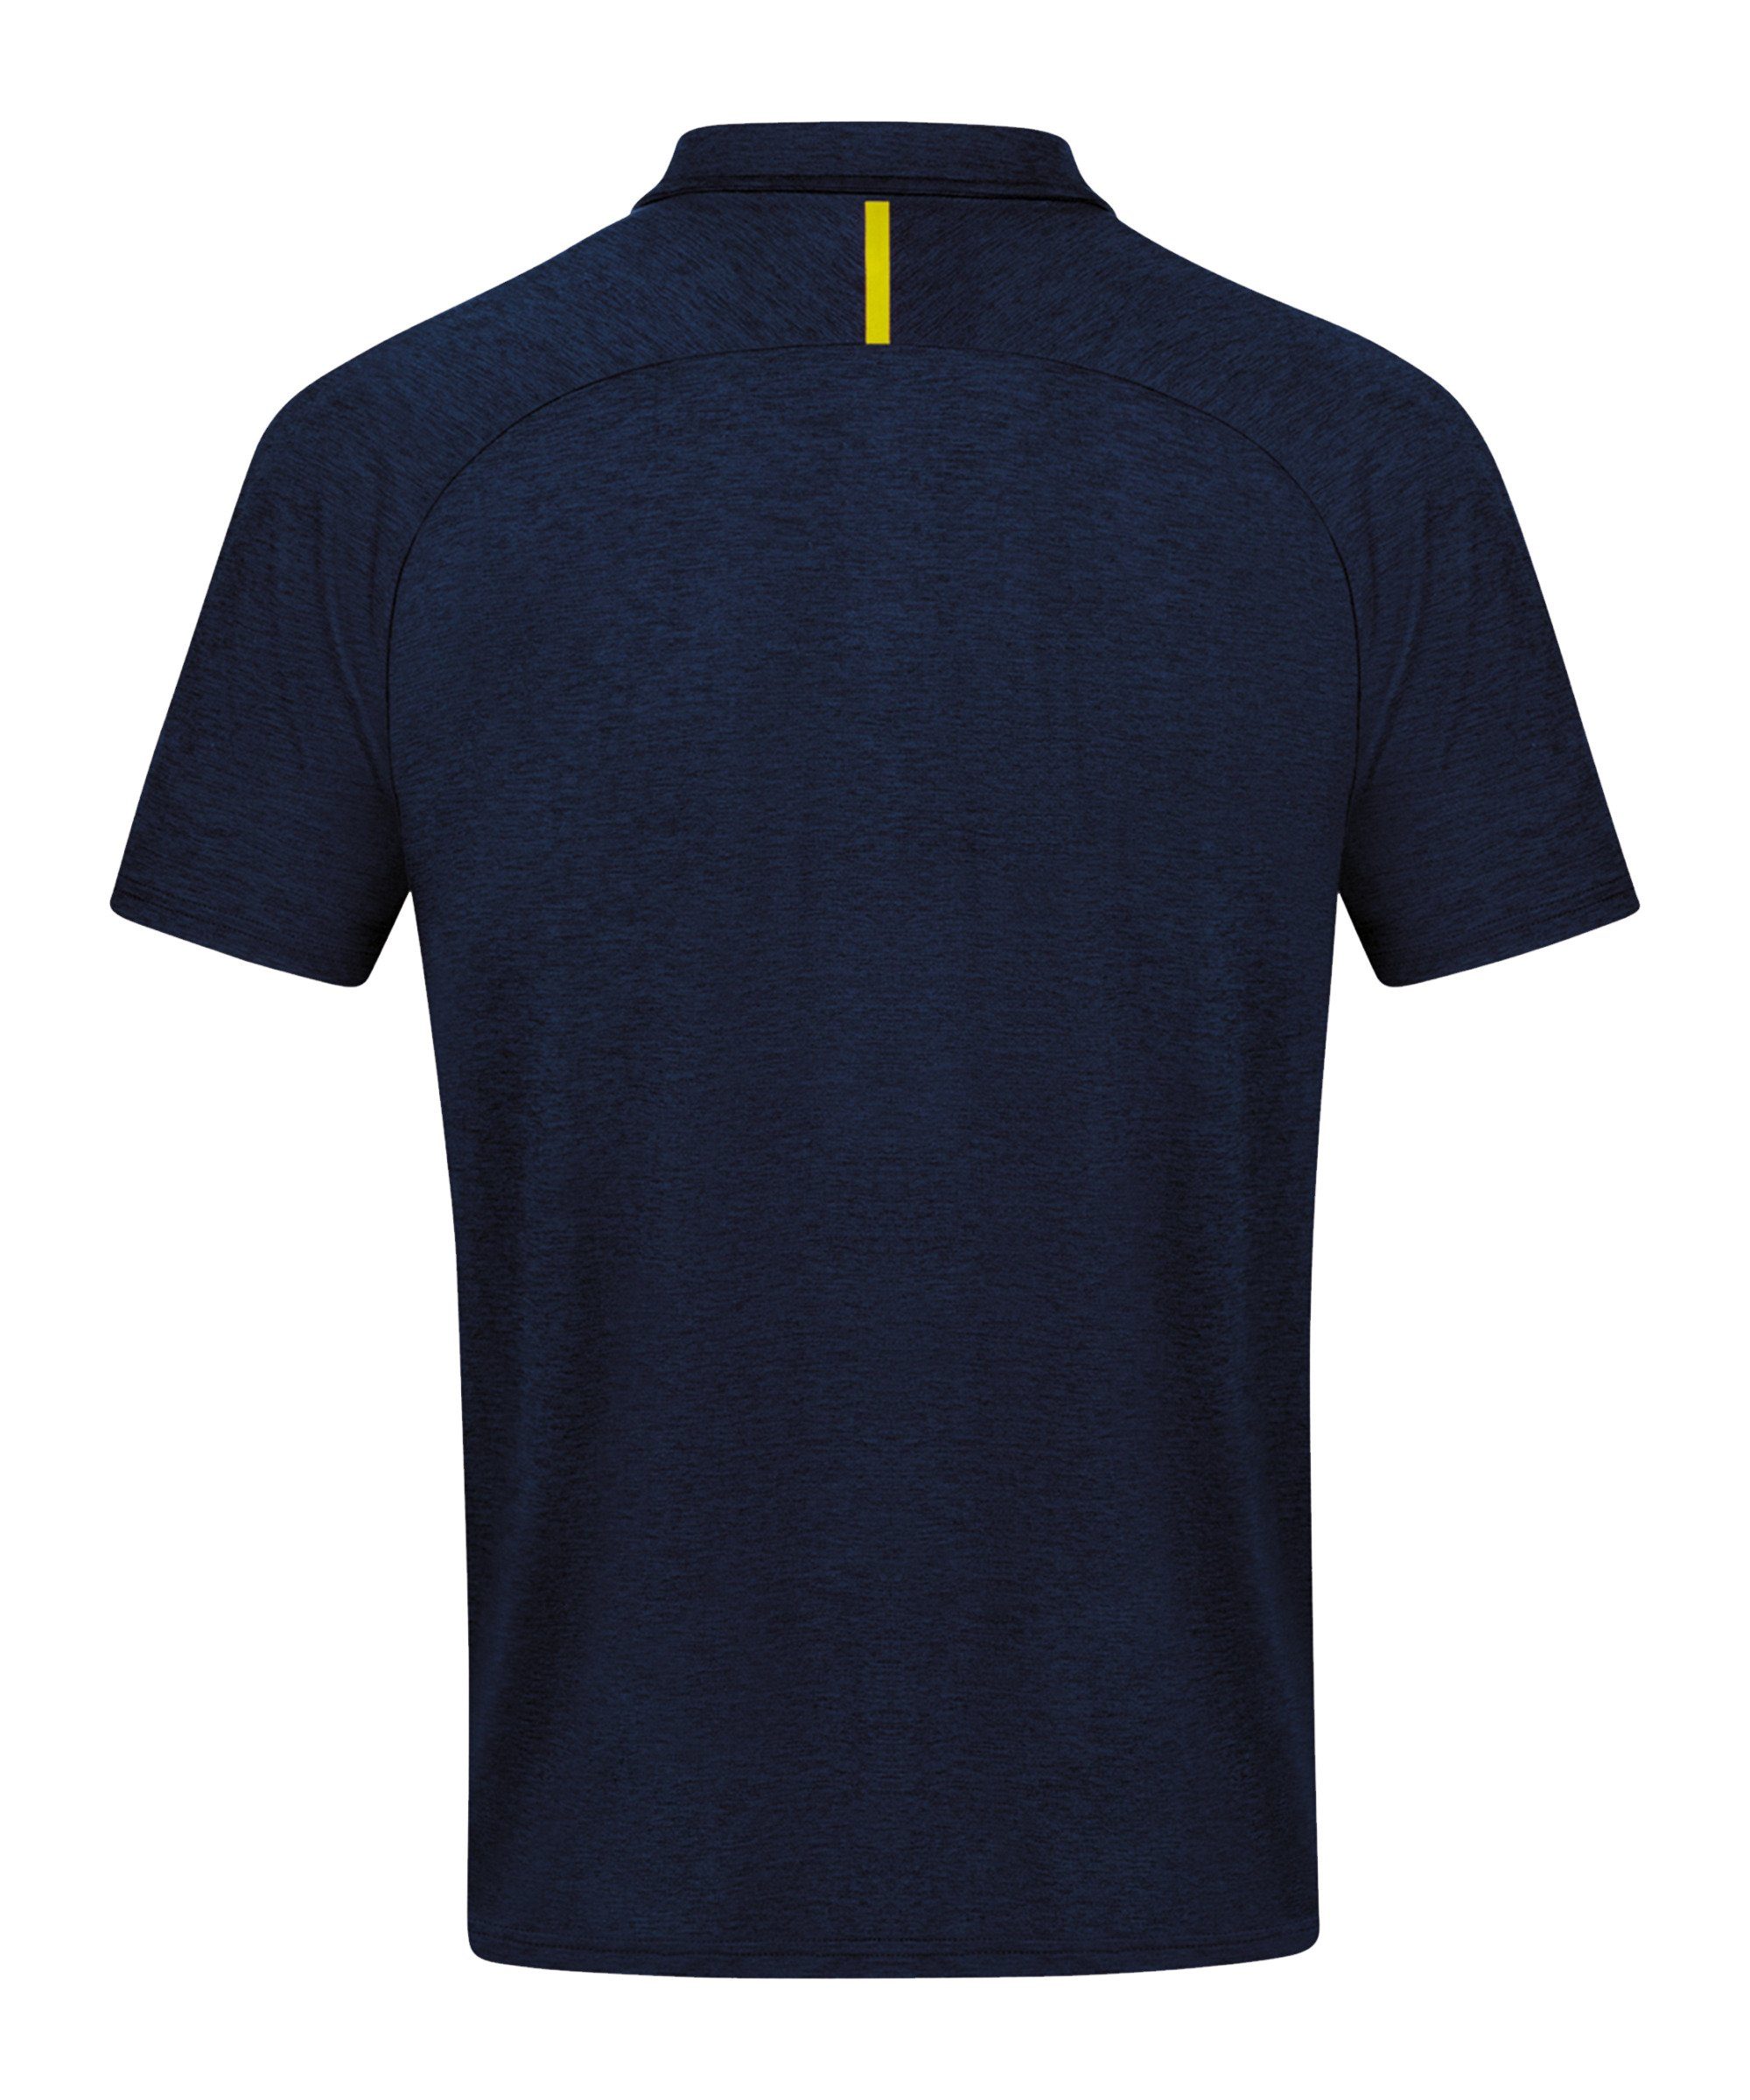 Jako T-Shirt Challenge Polo default blaugelb